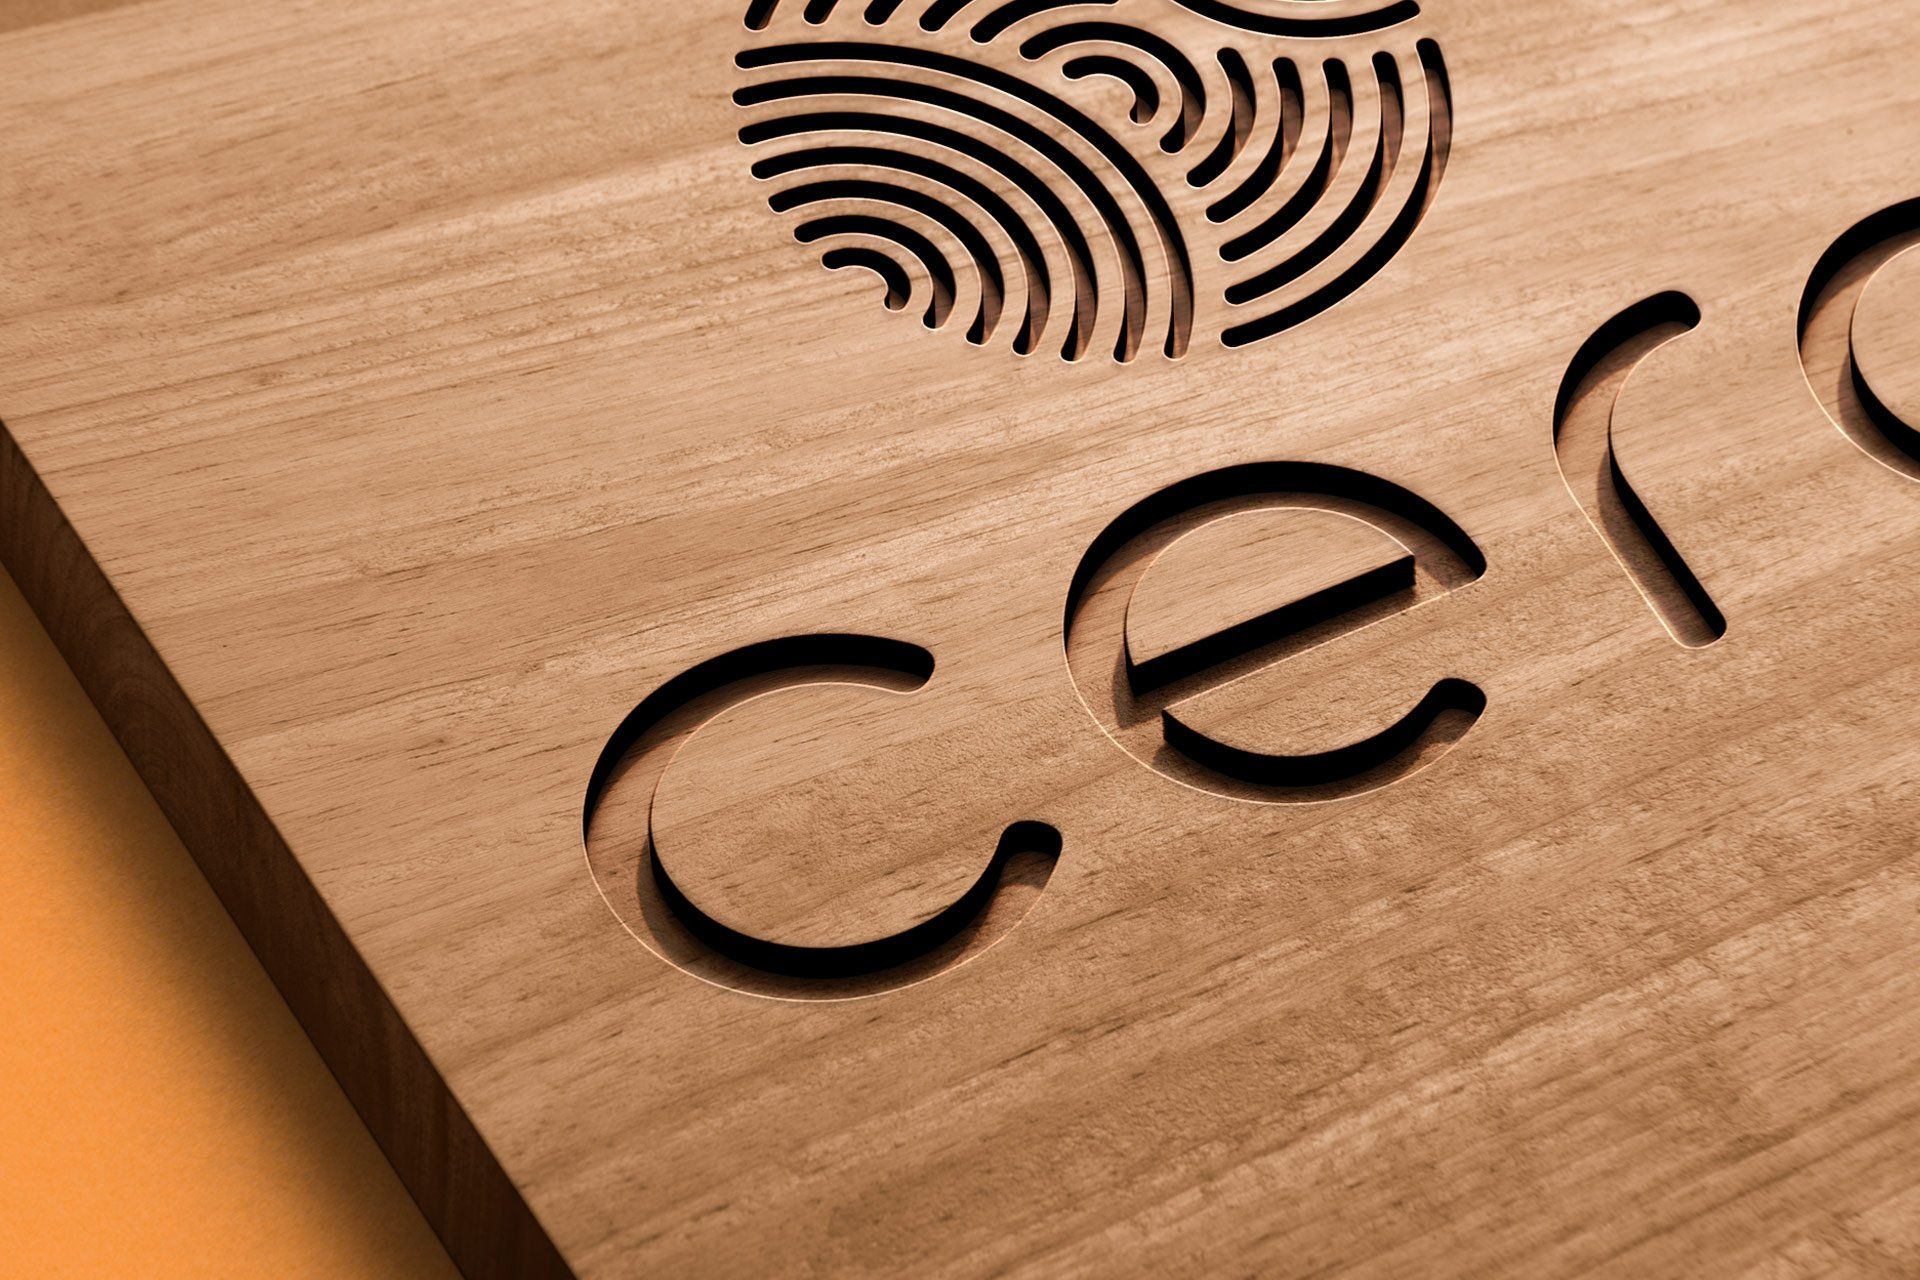 Close up of three-quarters of the cero logo cut into wood.